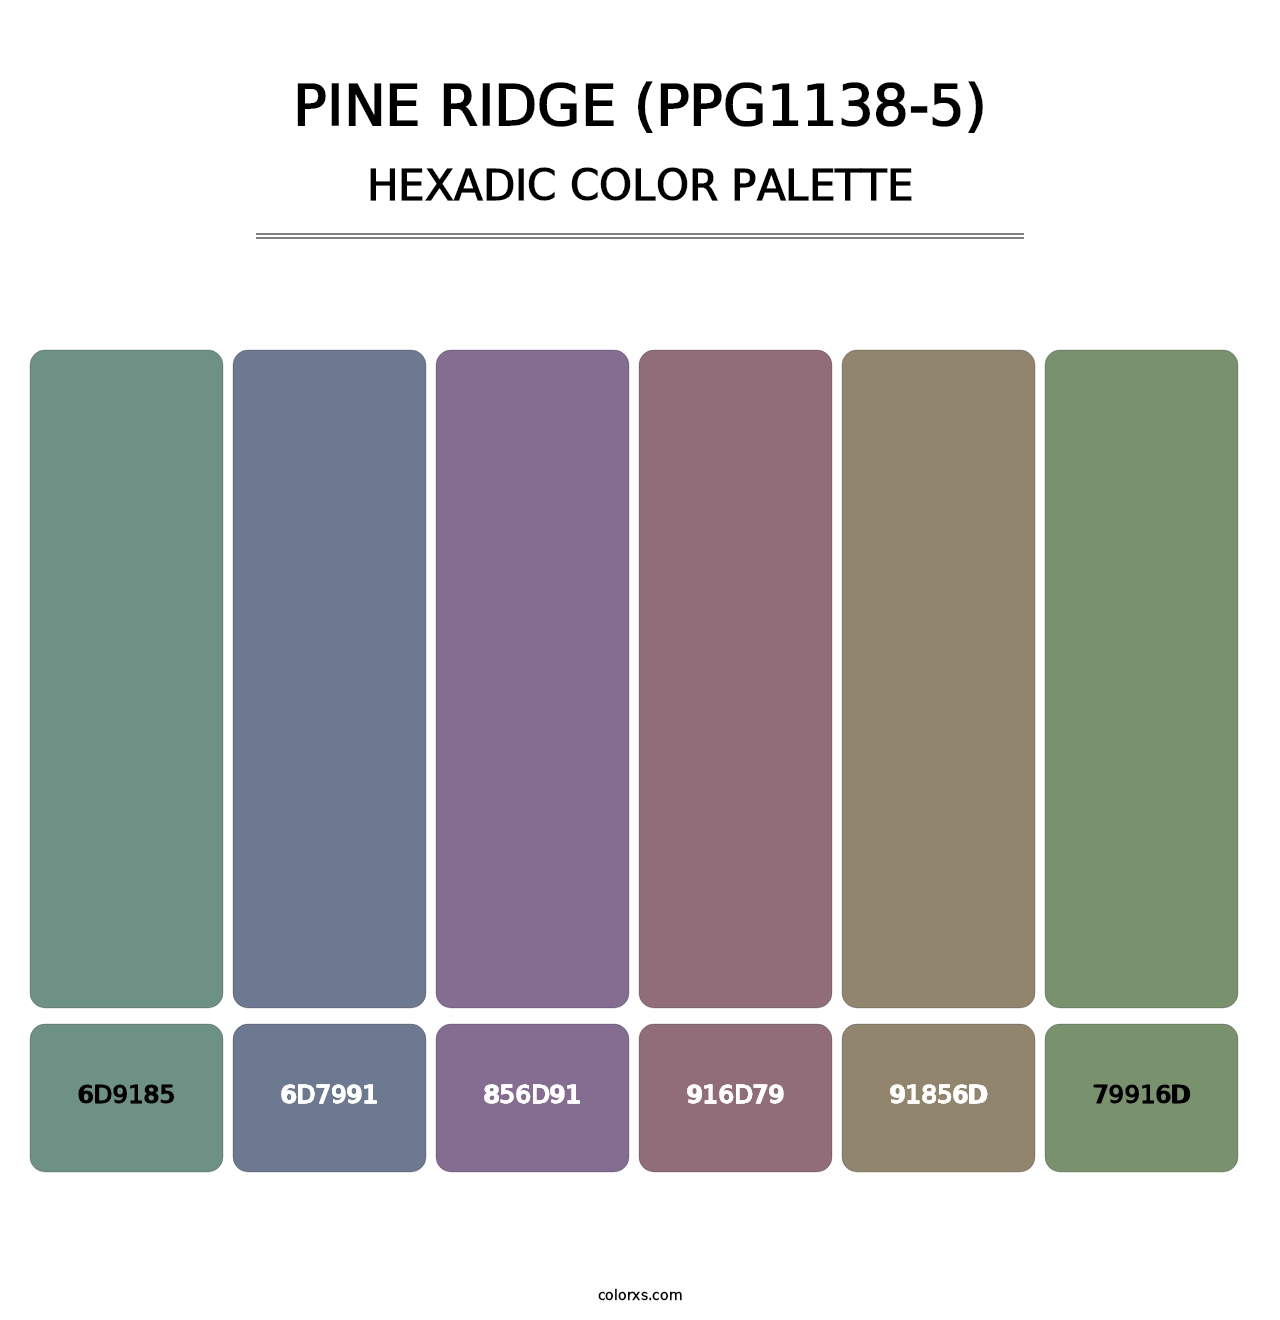 Pine Ridge (PPG1138-5) - Hexadic Color Palette